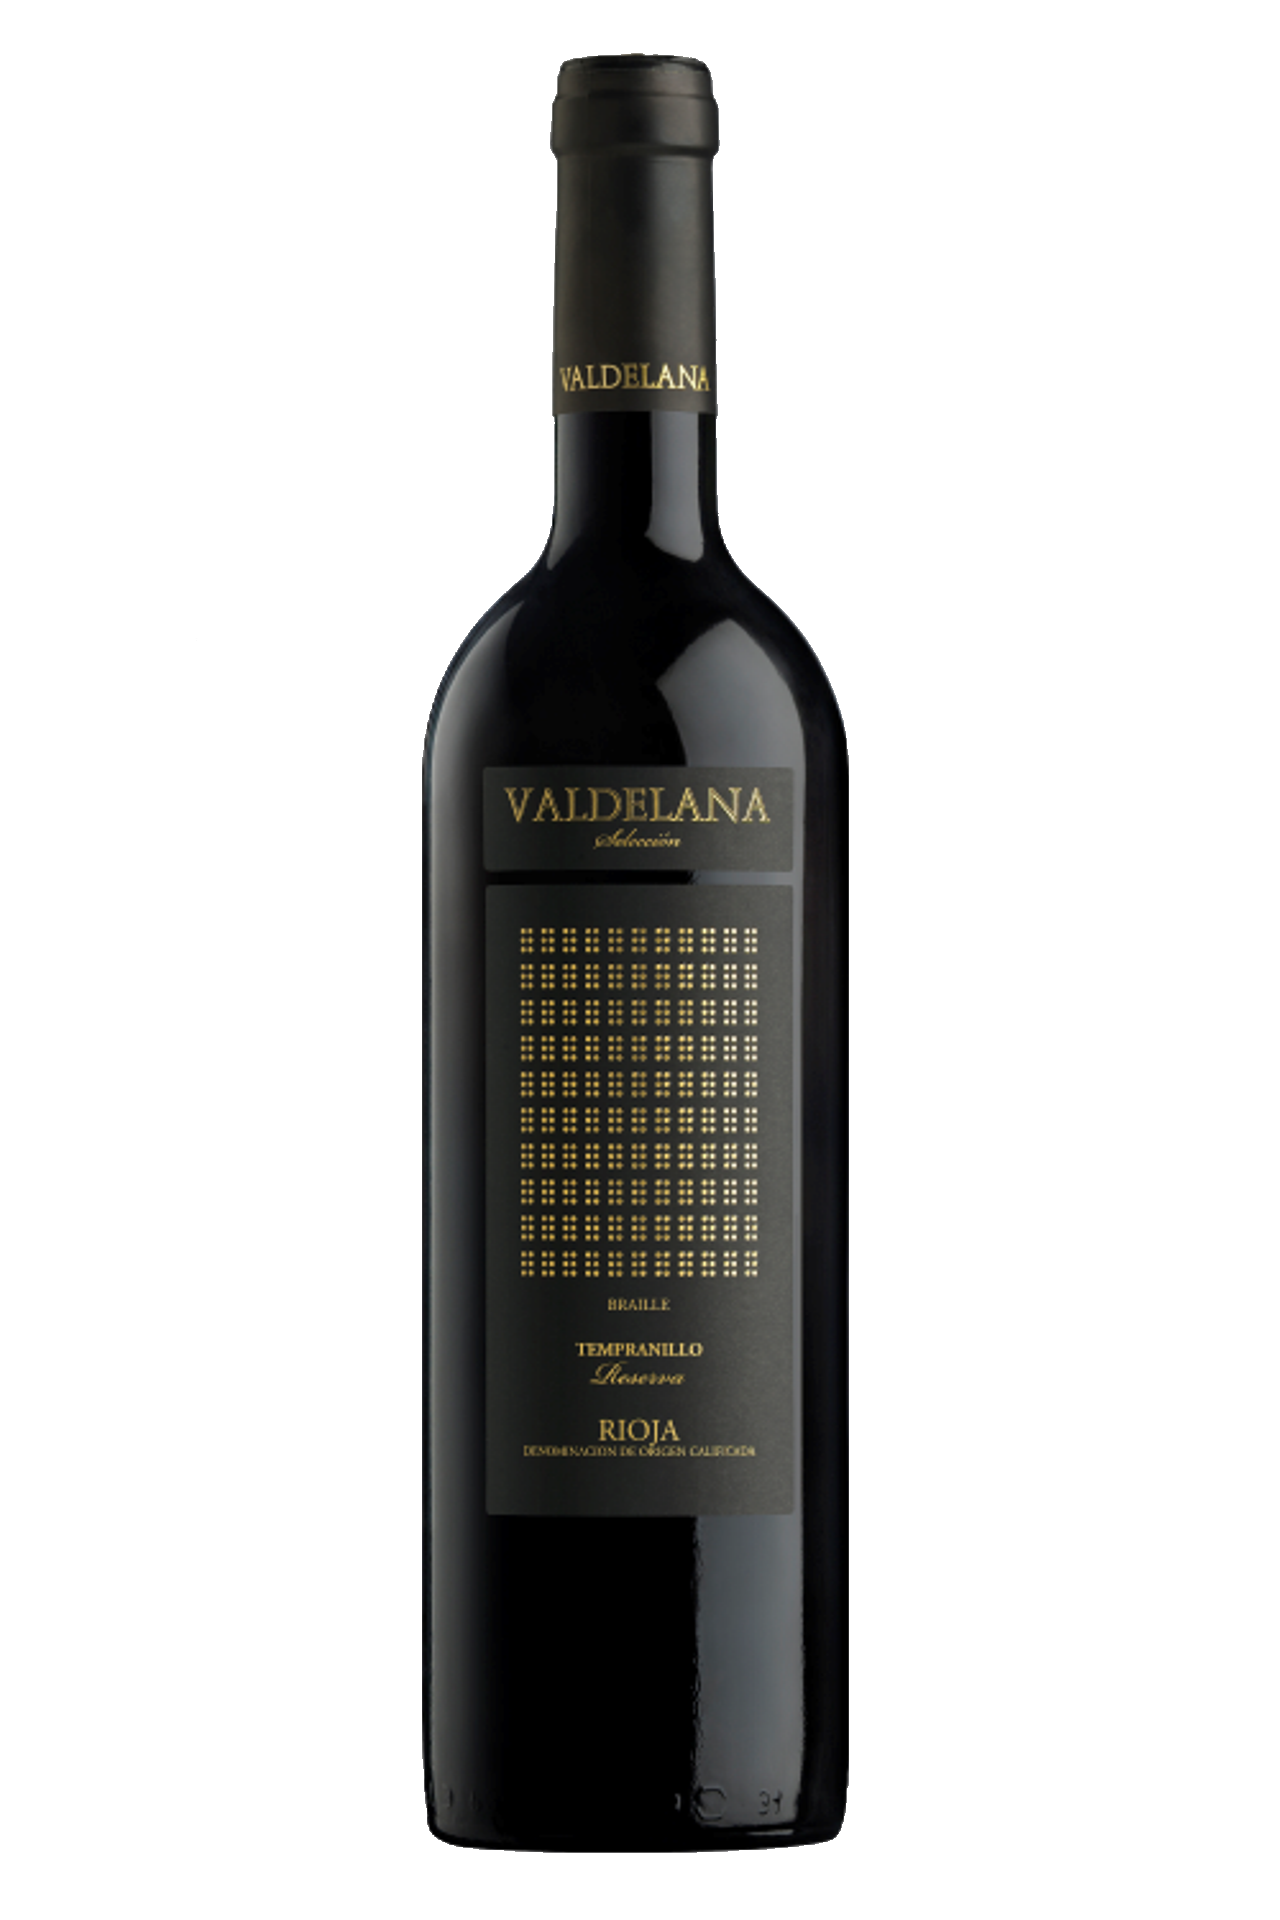 Valdelana Reserva Wine to you